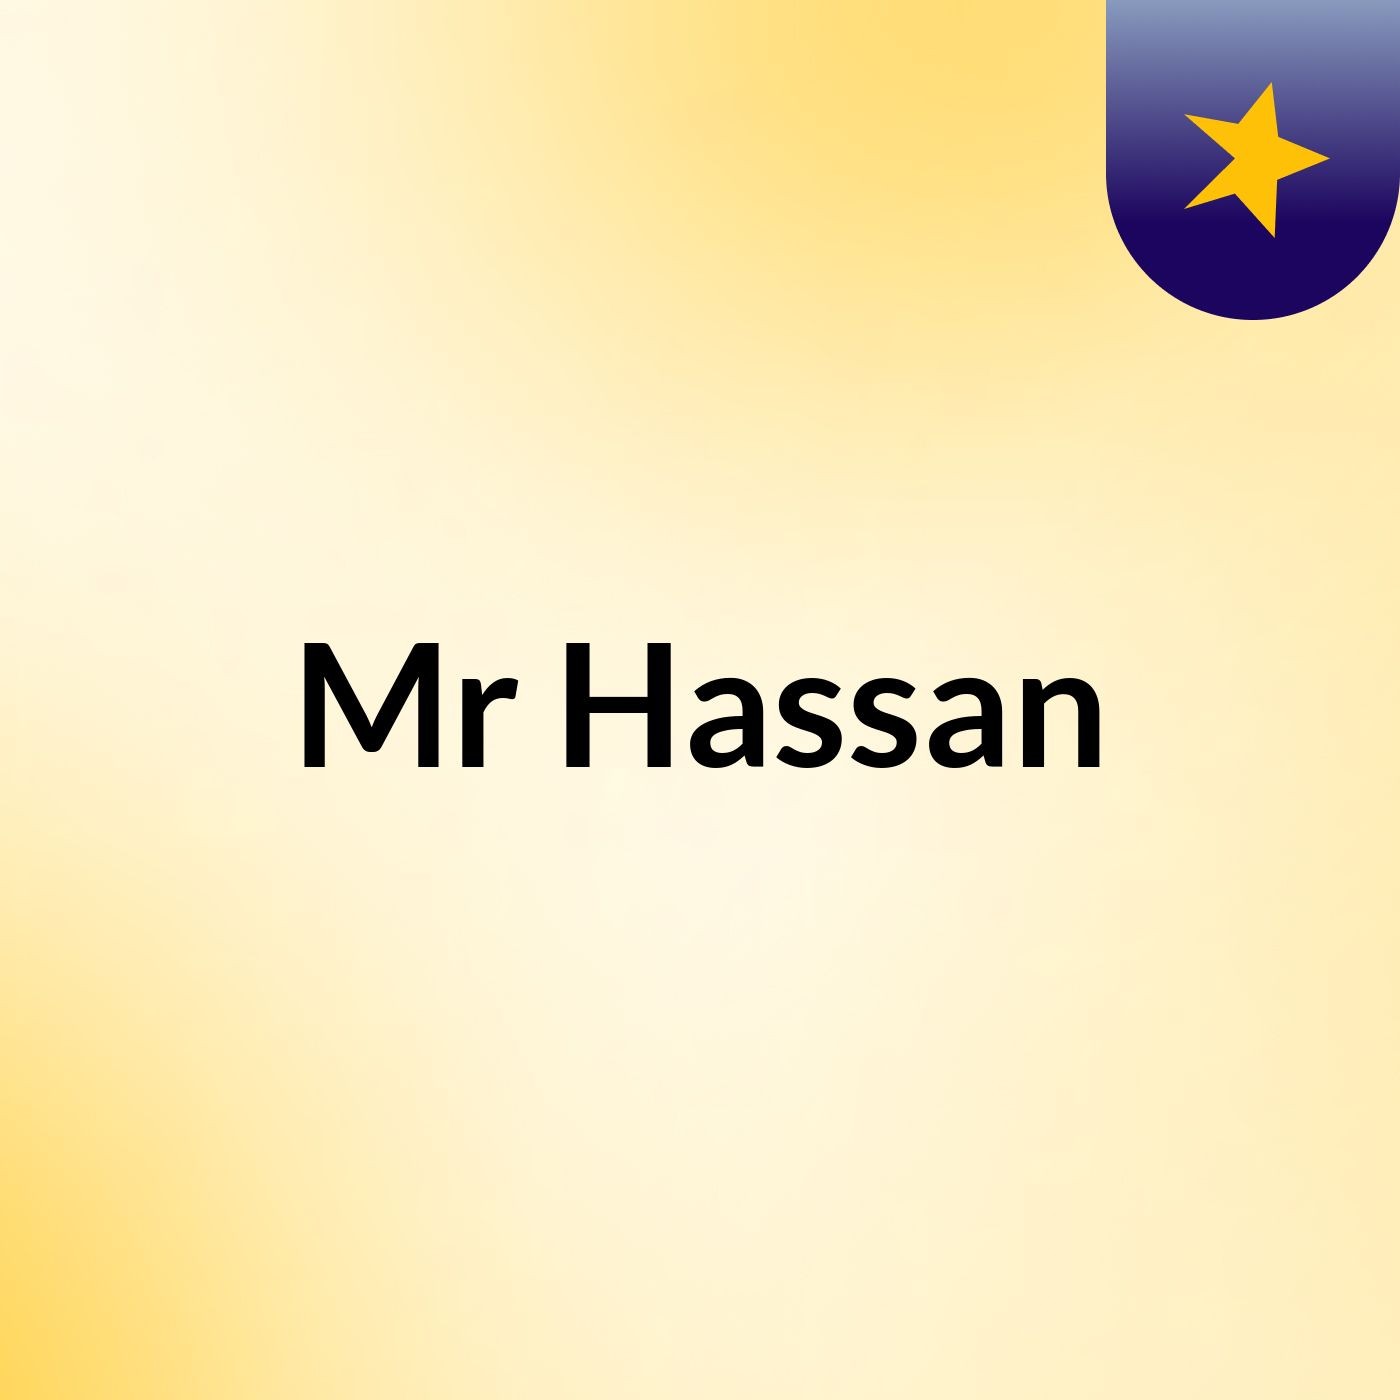 Mr Hassan